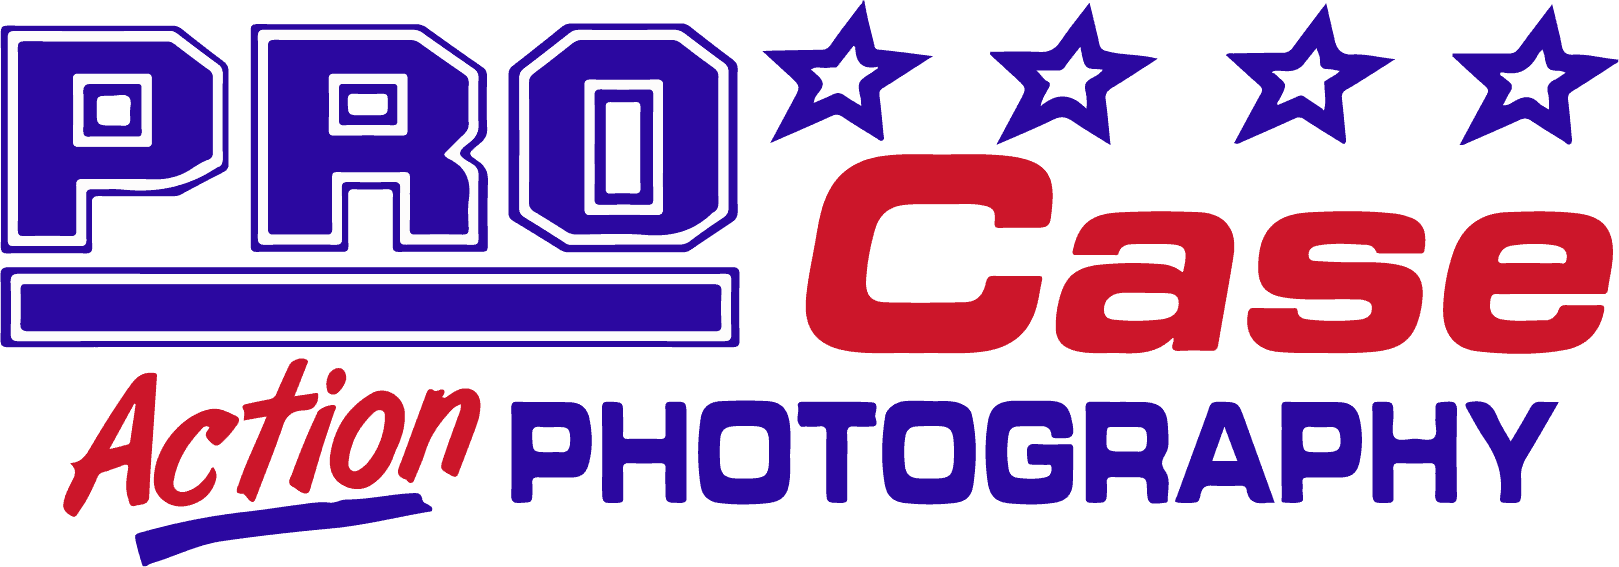 ProCase Sports Action Photography logo